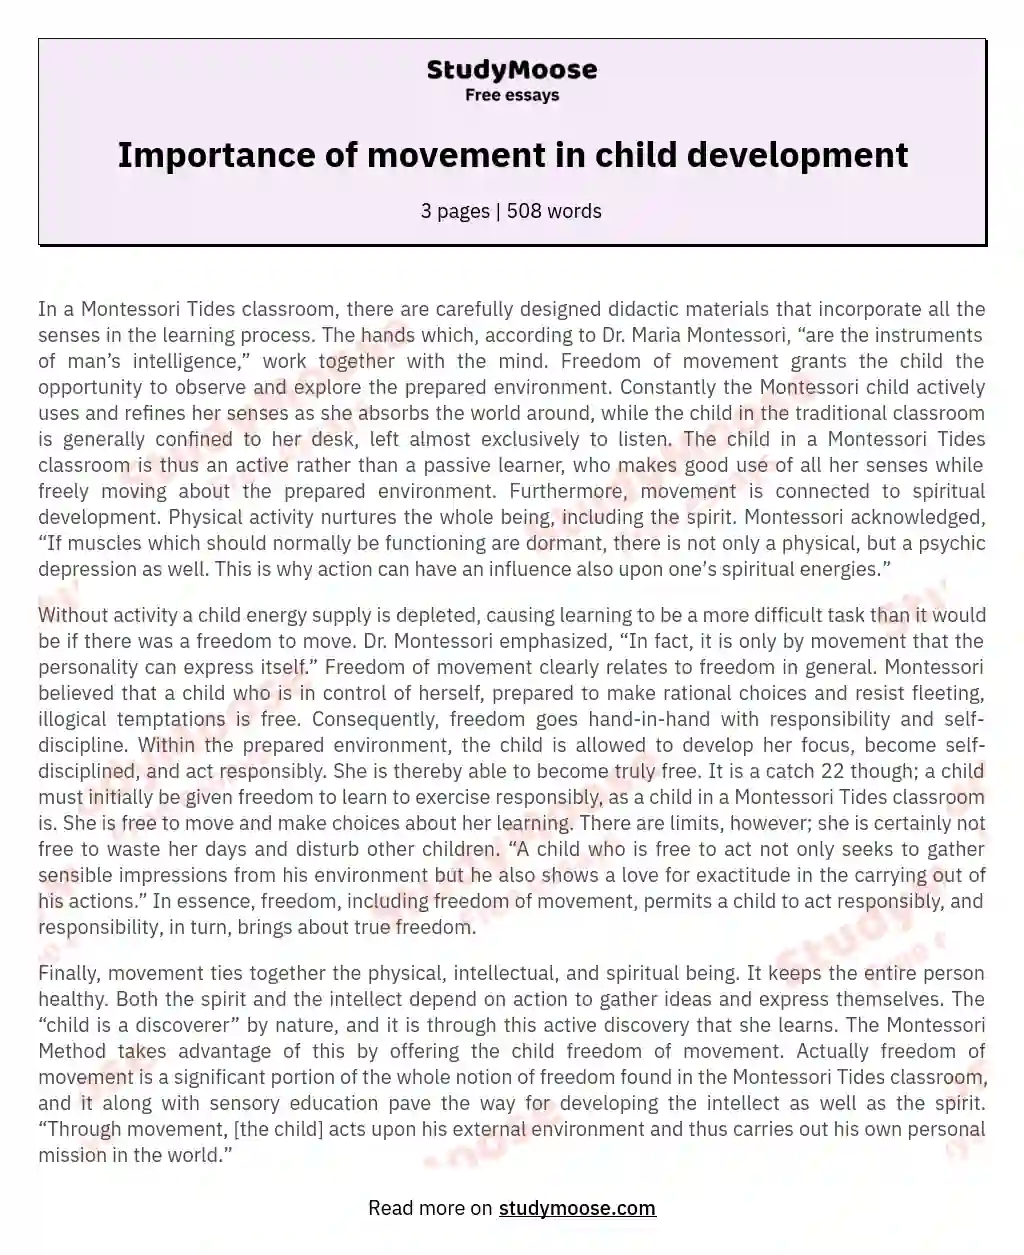 Importance of movement in child development